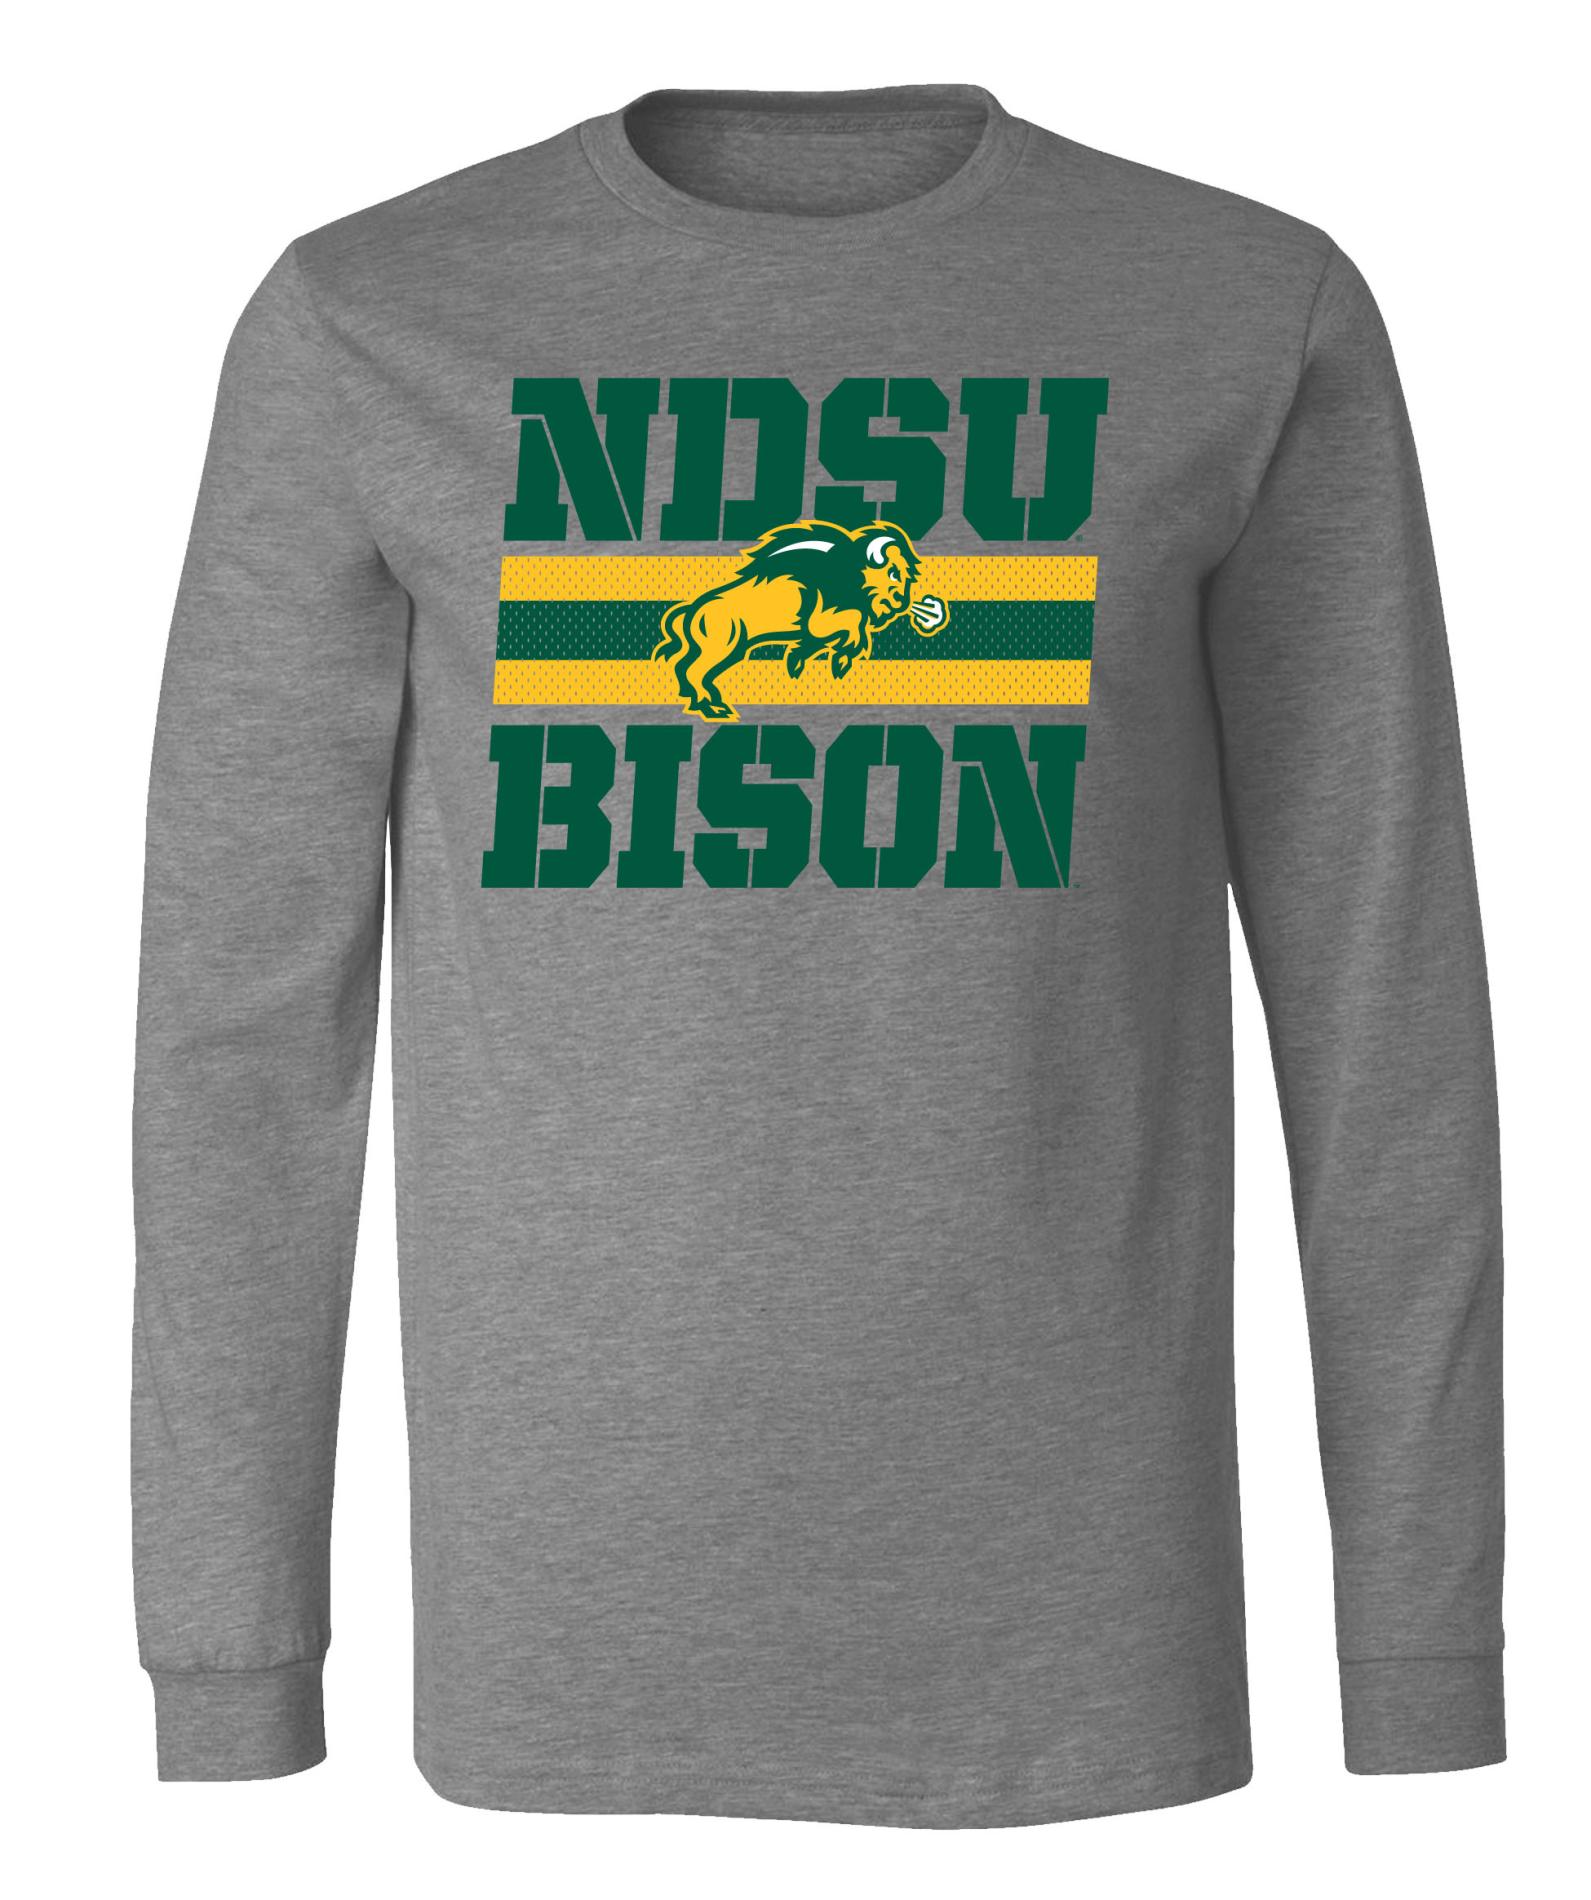 NCAA Boys' Long-Sleeve T-Shirt - North Dakota State Bison